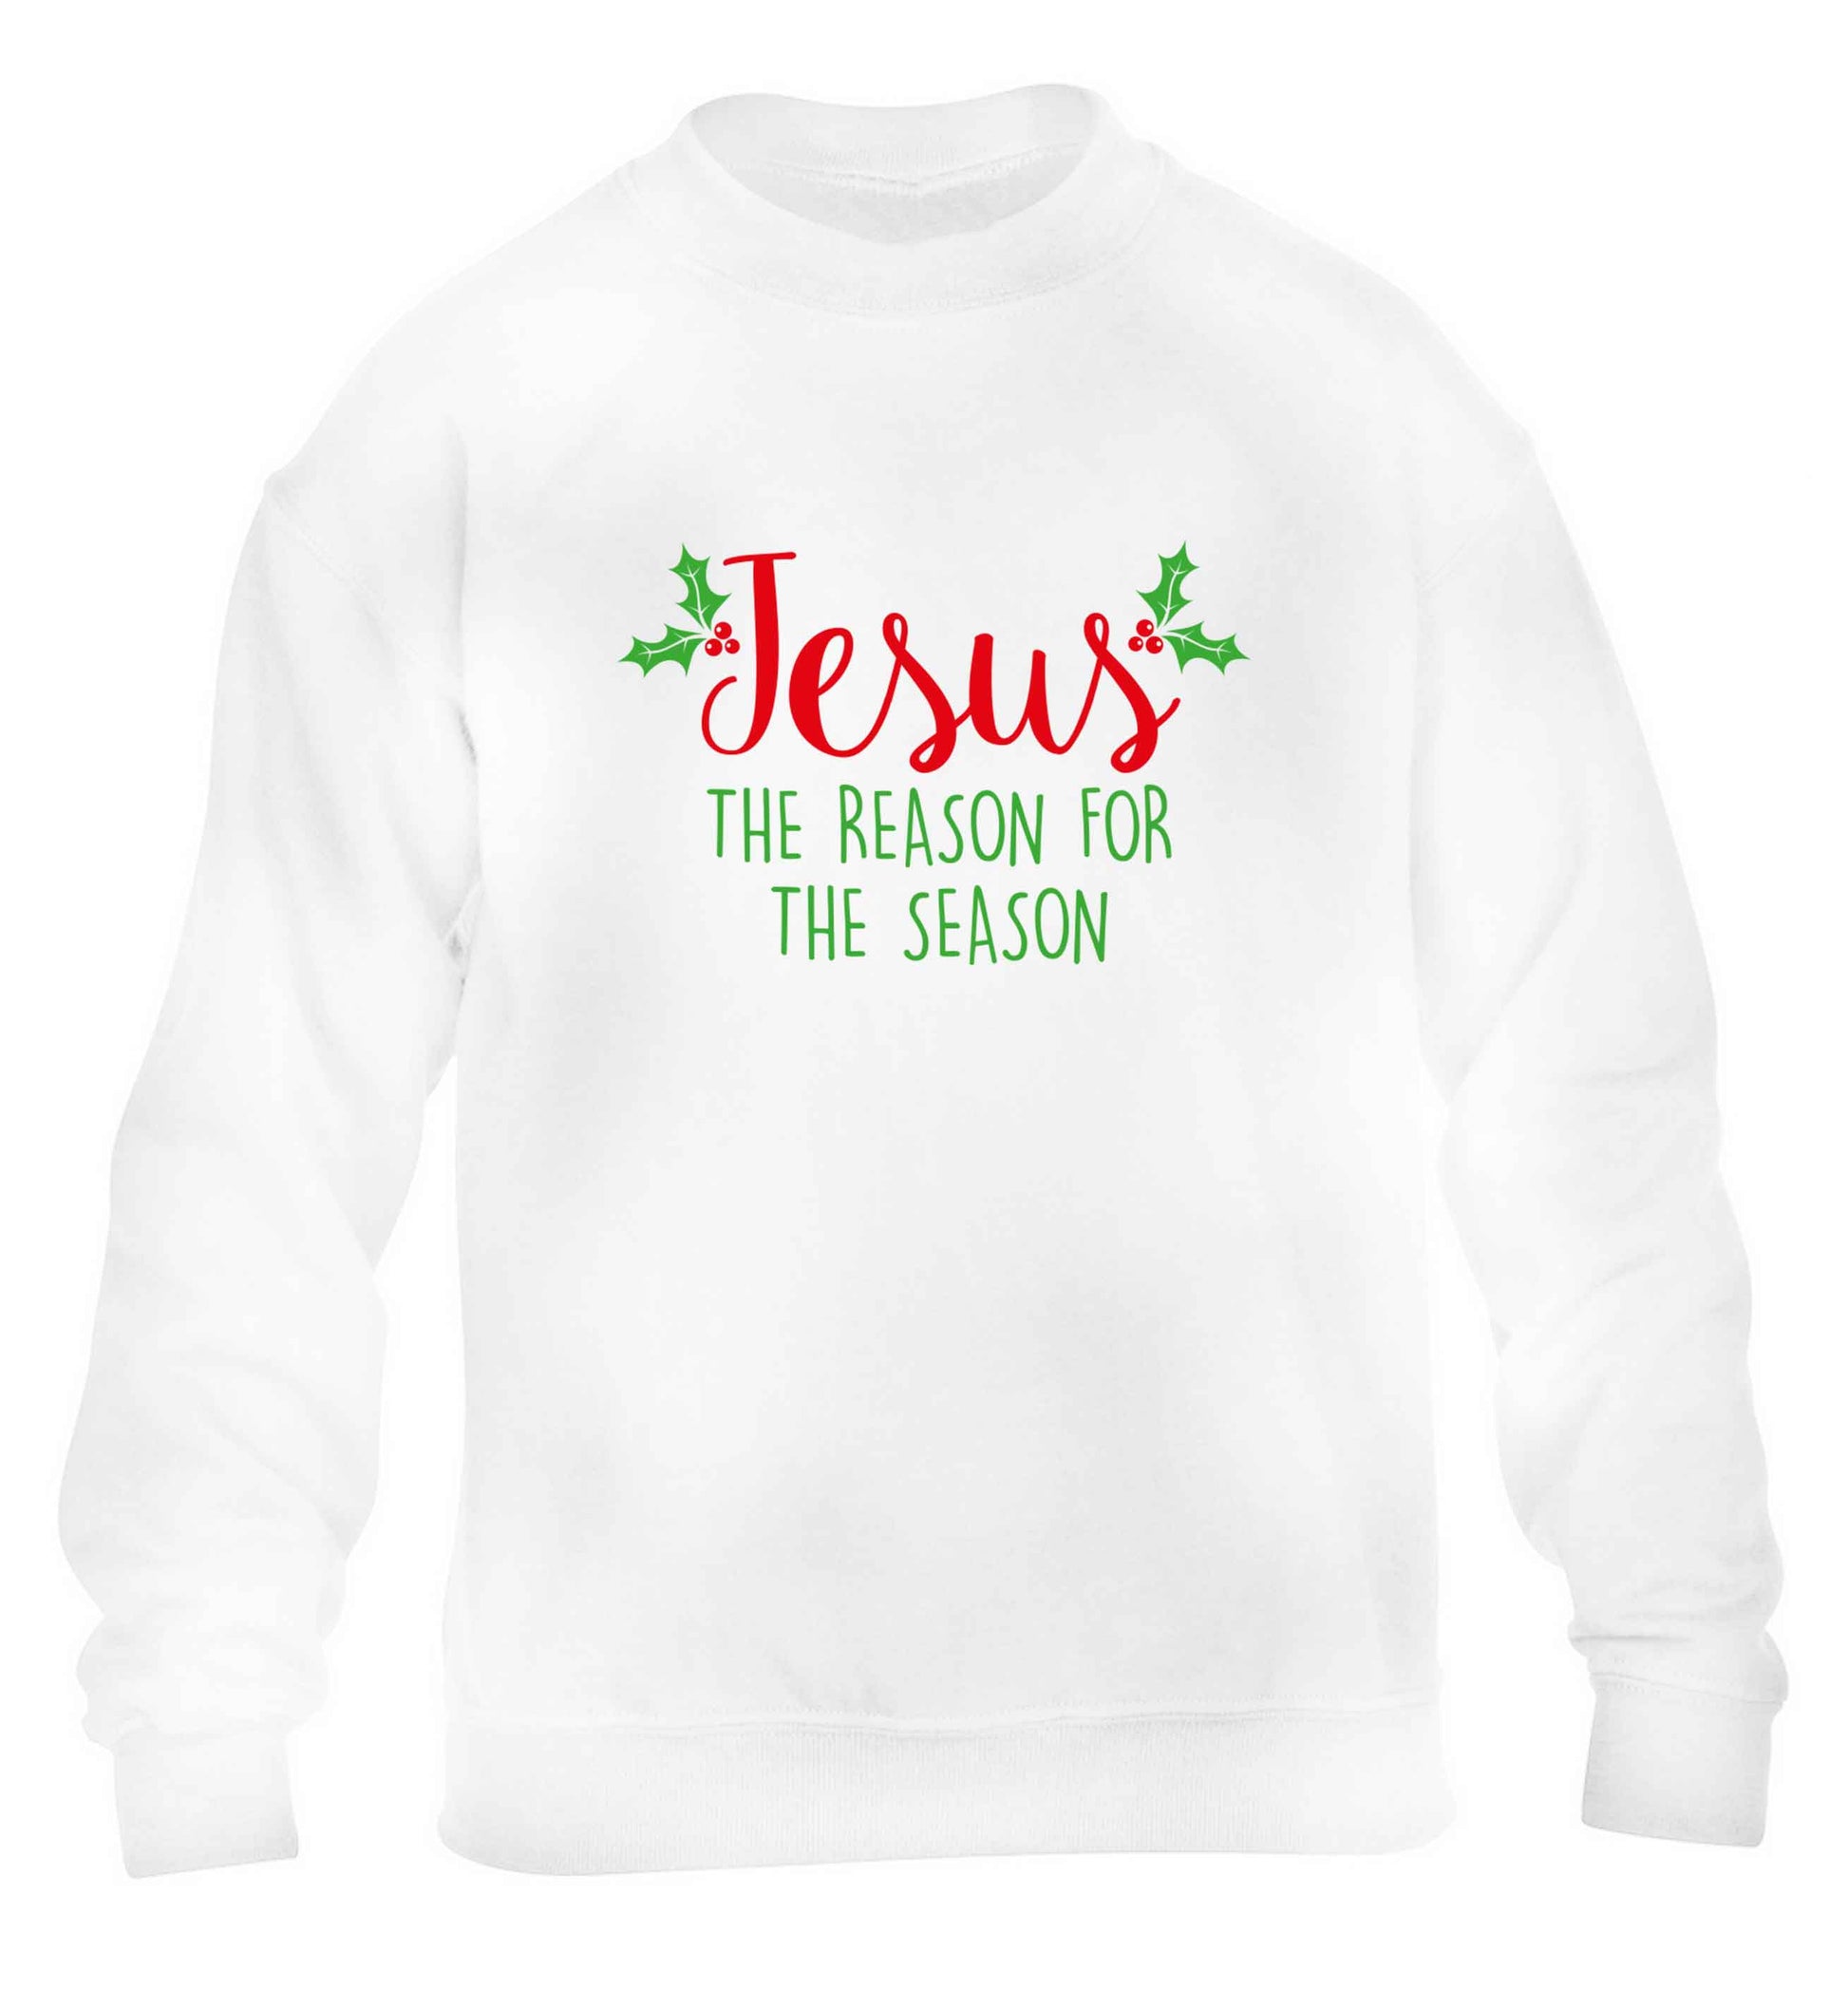 Jesus the reason for the season children's white sweater 12-13 Years